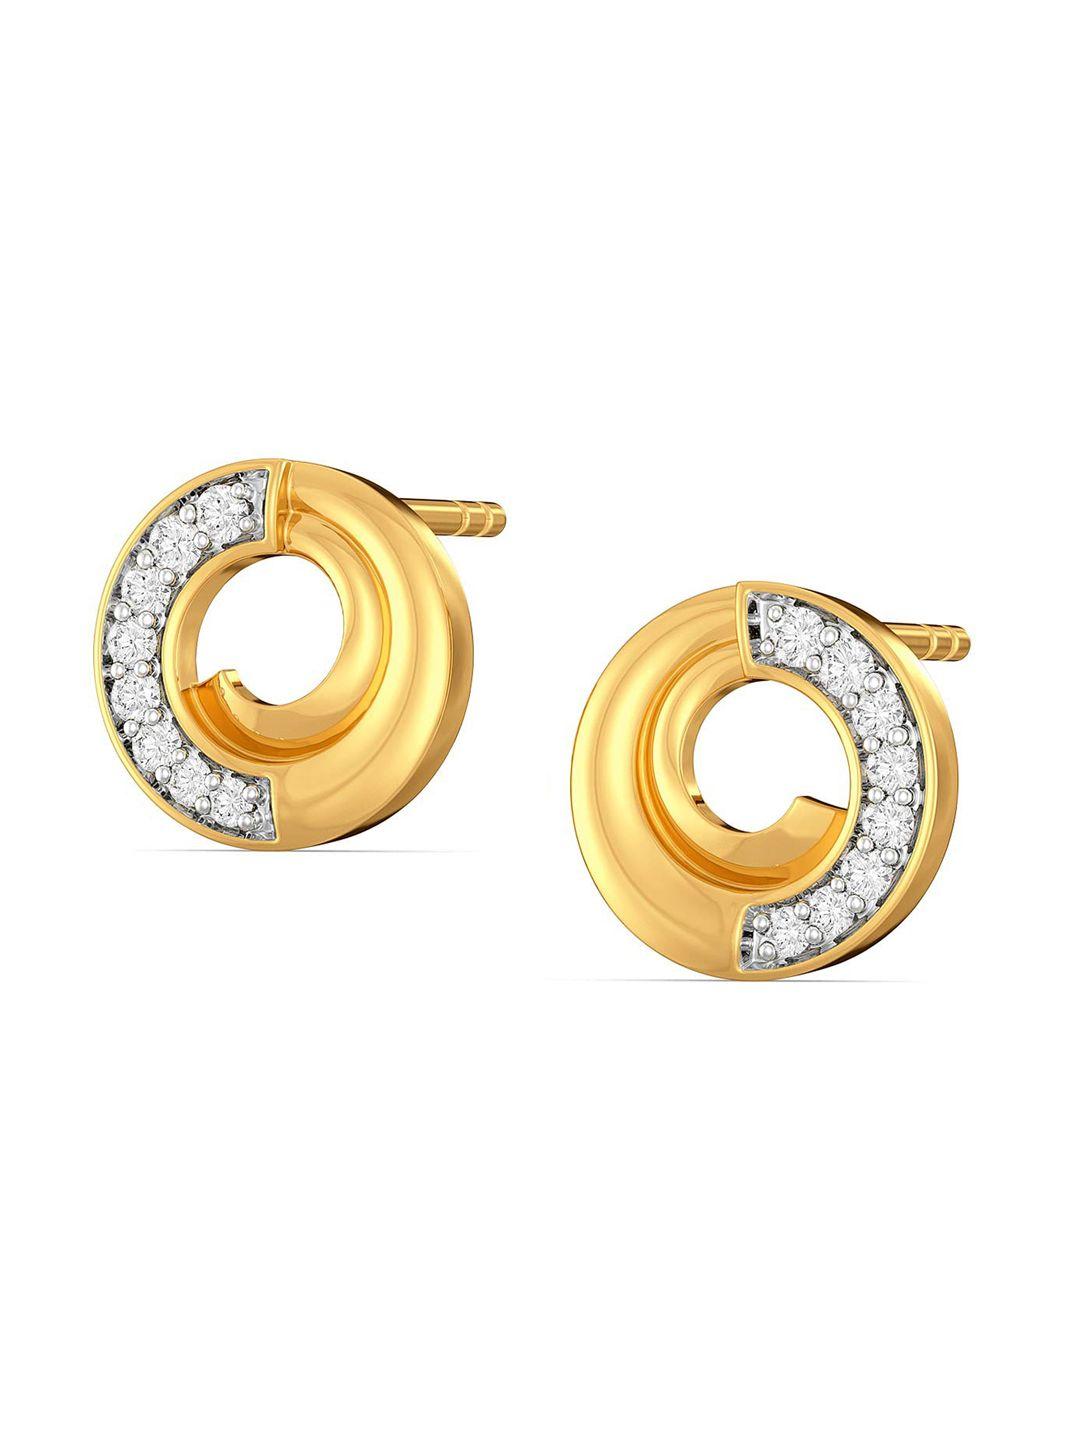 melorra glow n glimpse diamond-studded rhodium-plated 18kt gold studs earrings- 2.24gm